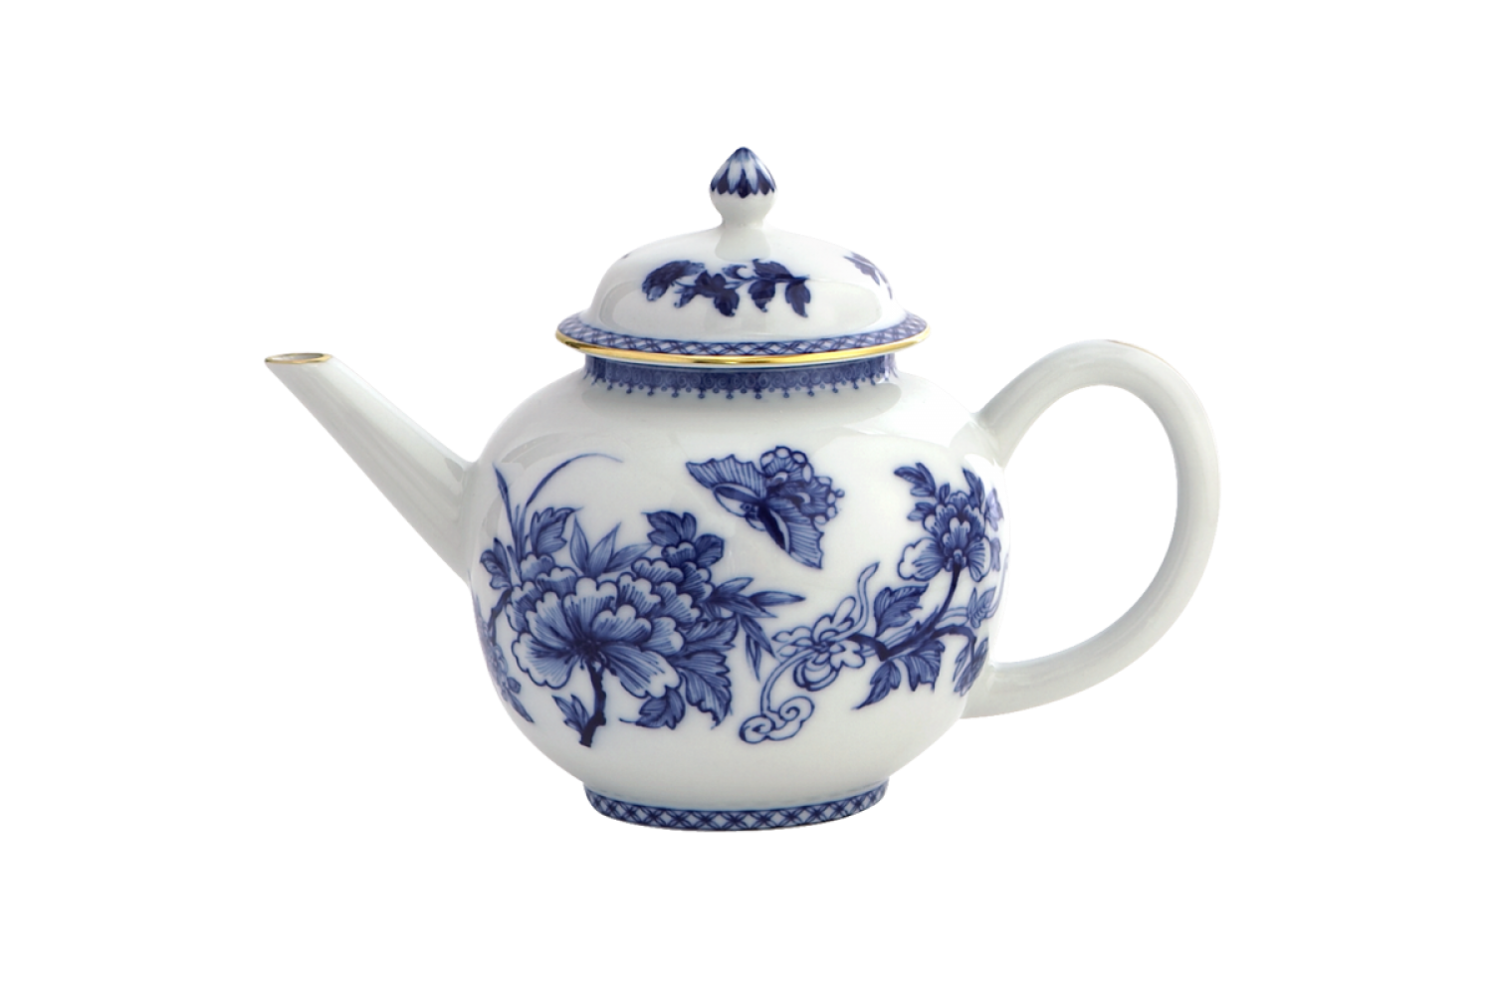 Imperial Blue Teapot